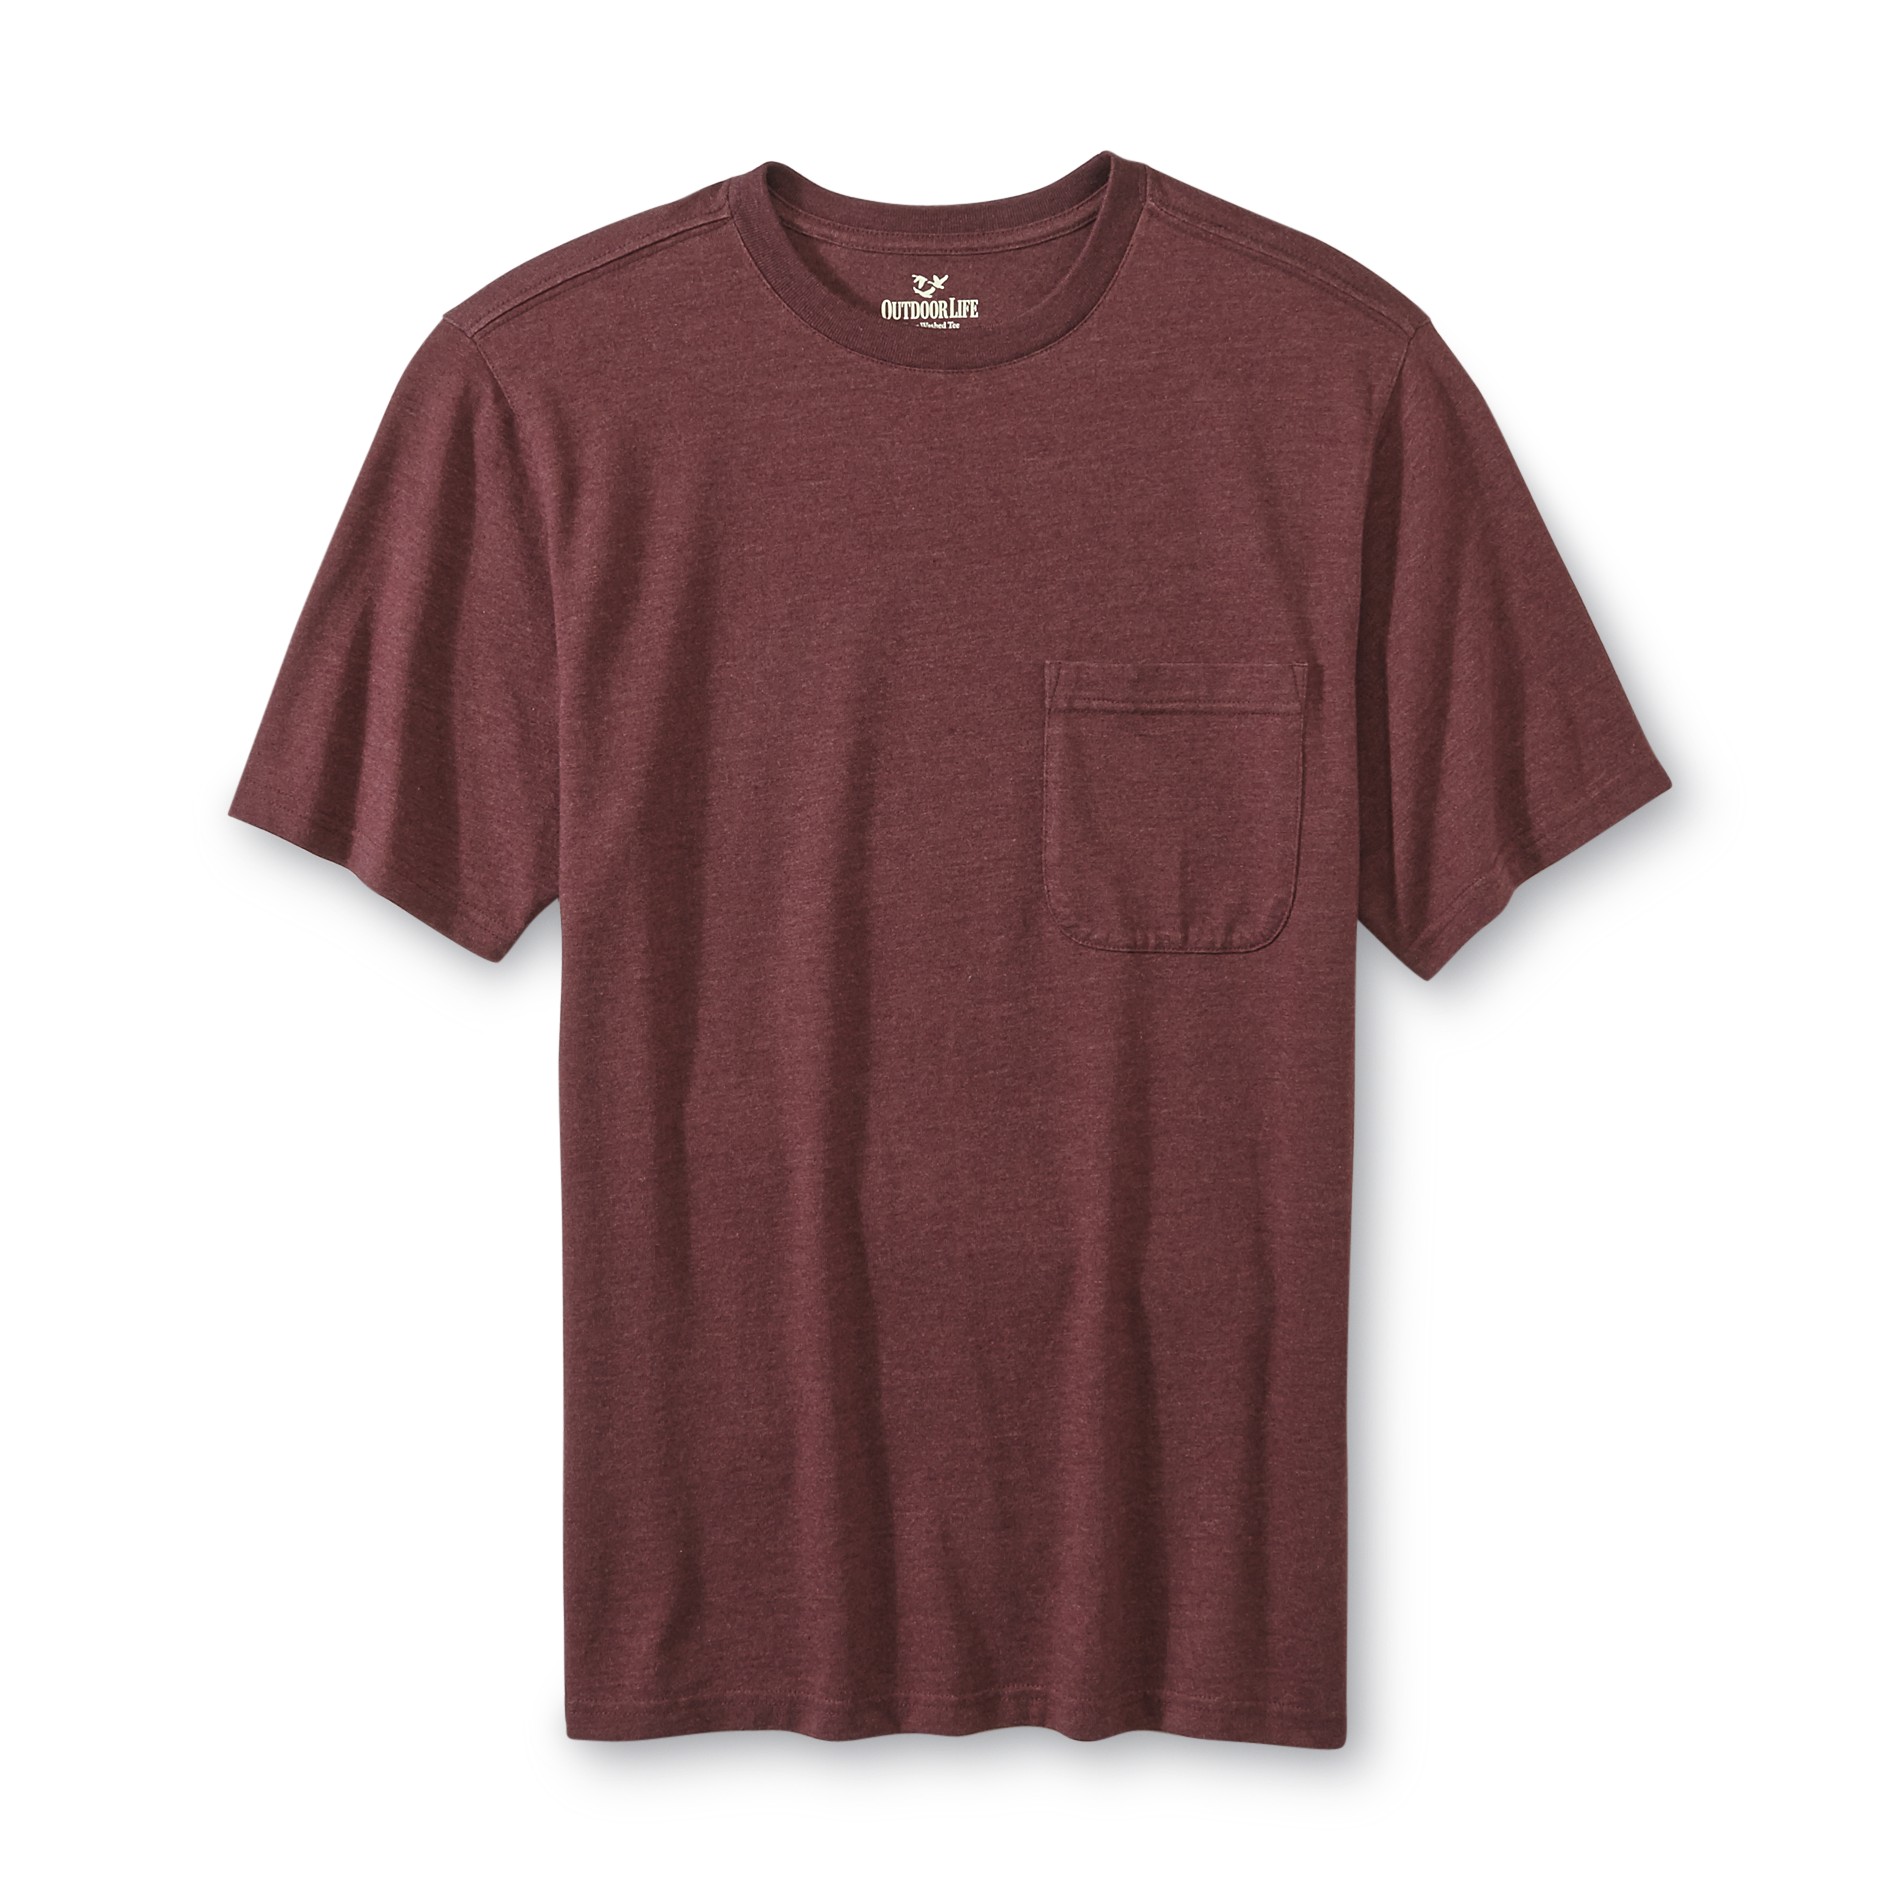 Outdoor Life Men's Big & Tall Short-Sleeve Pocket T-Shirt